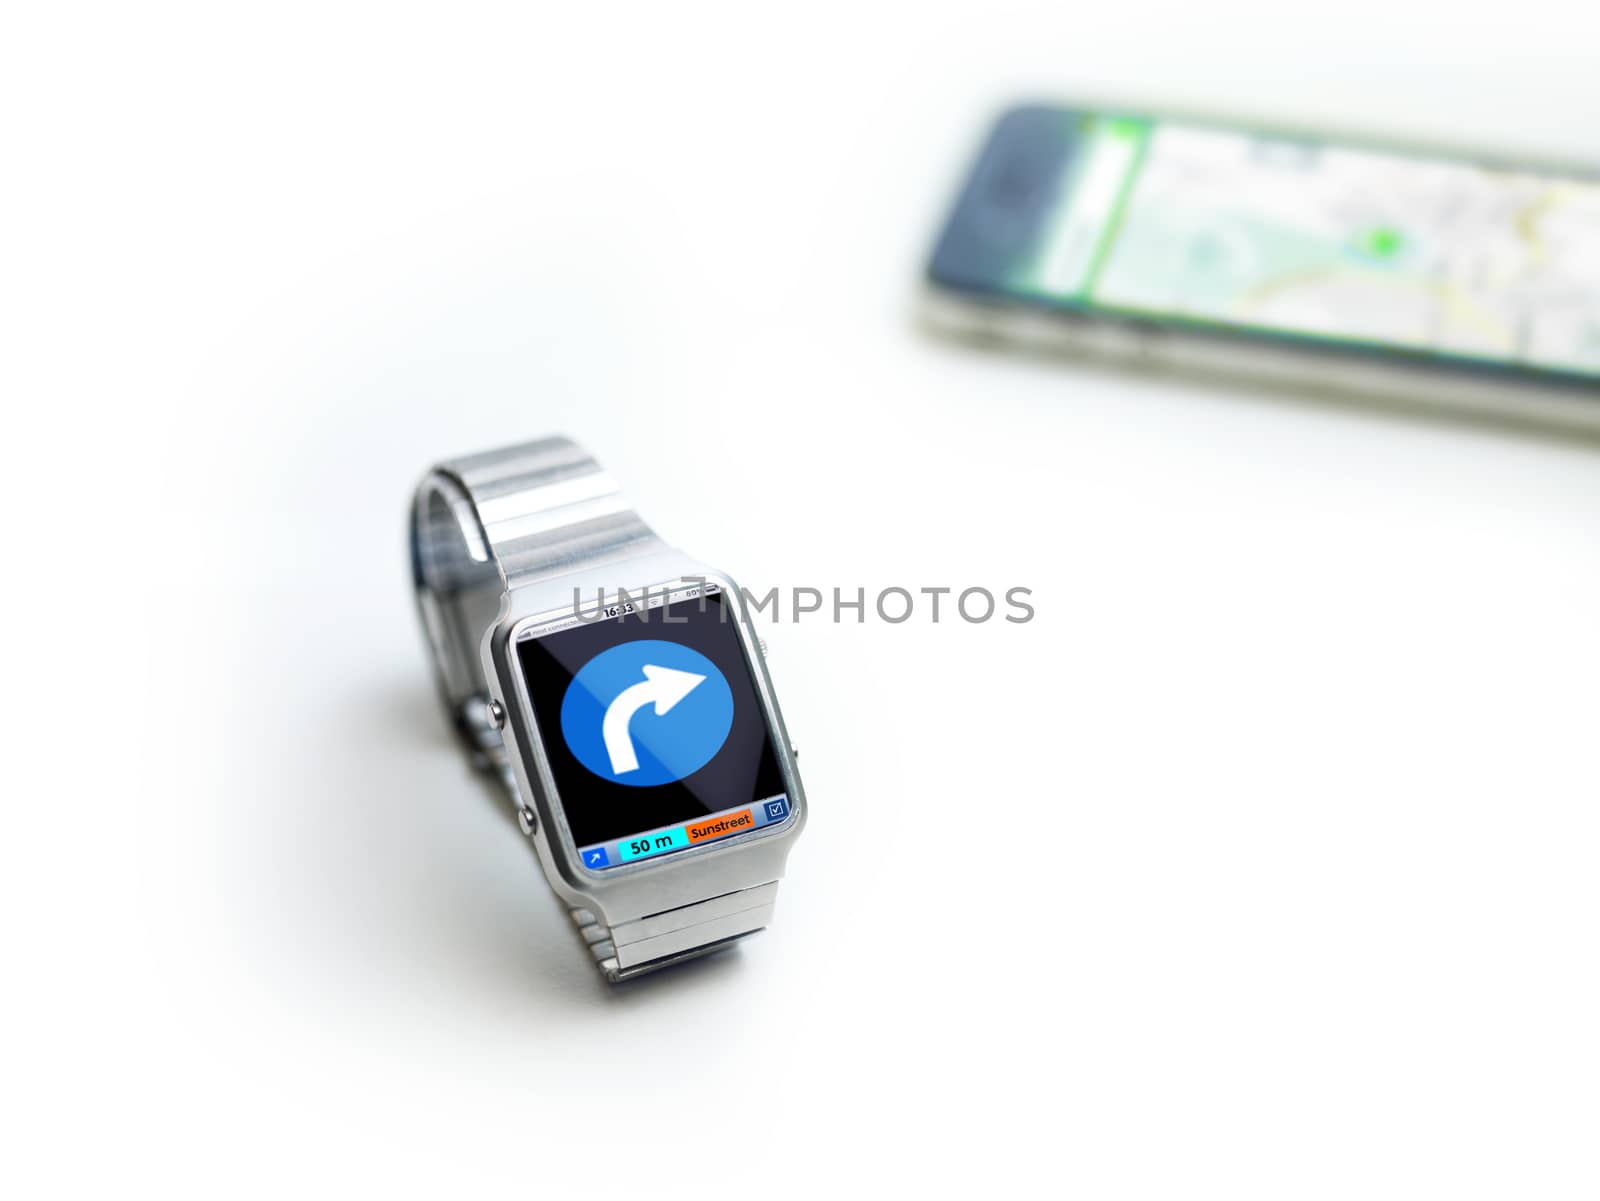 Smart watch the data watch- iwatch by aa-w